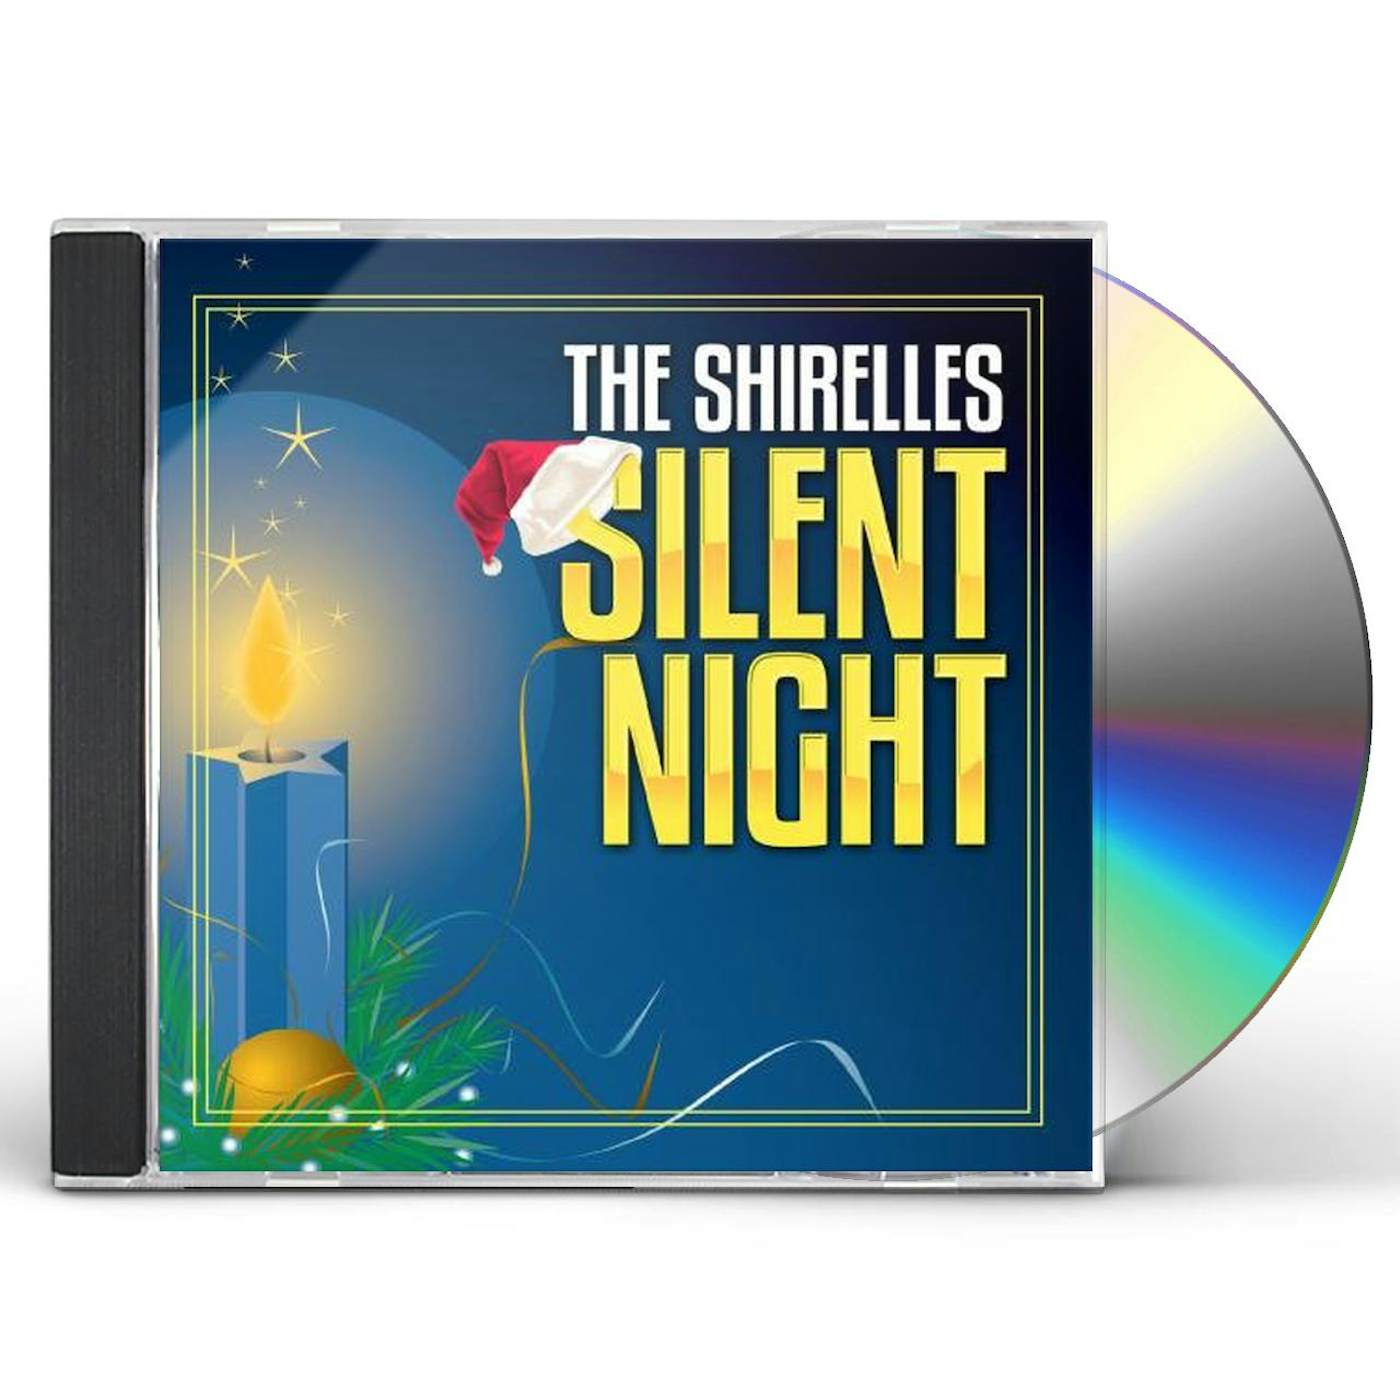 The Shirelles SILENT NIGHT CD